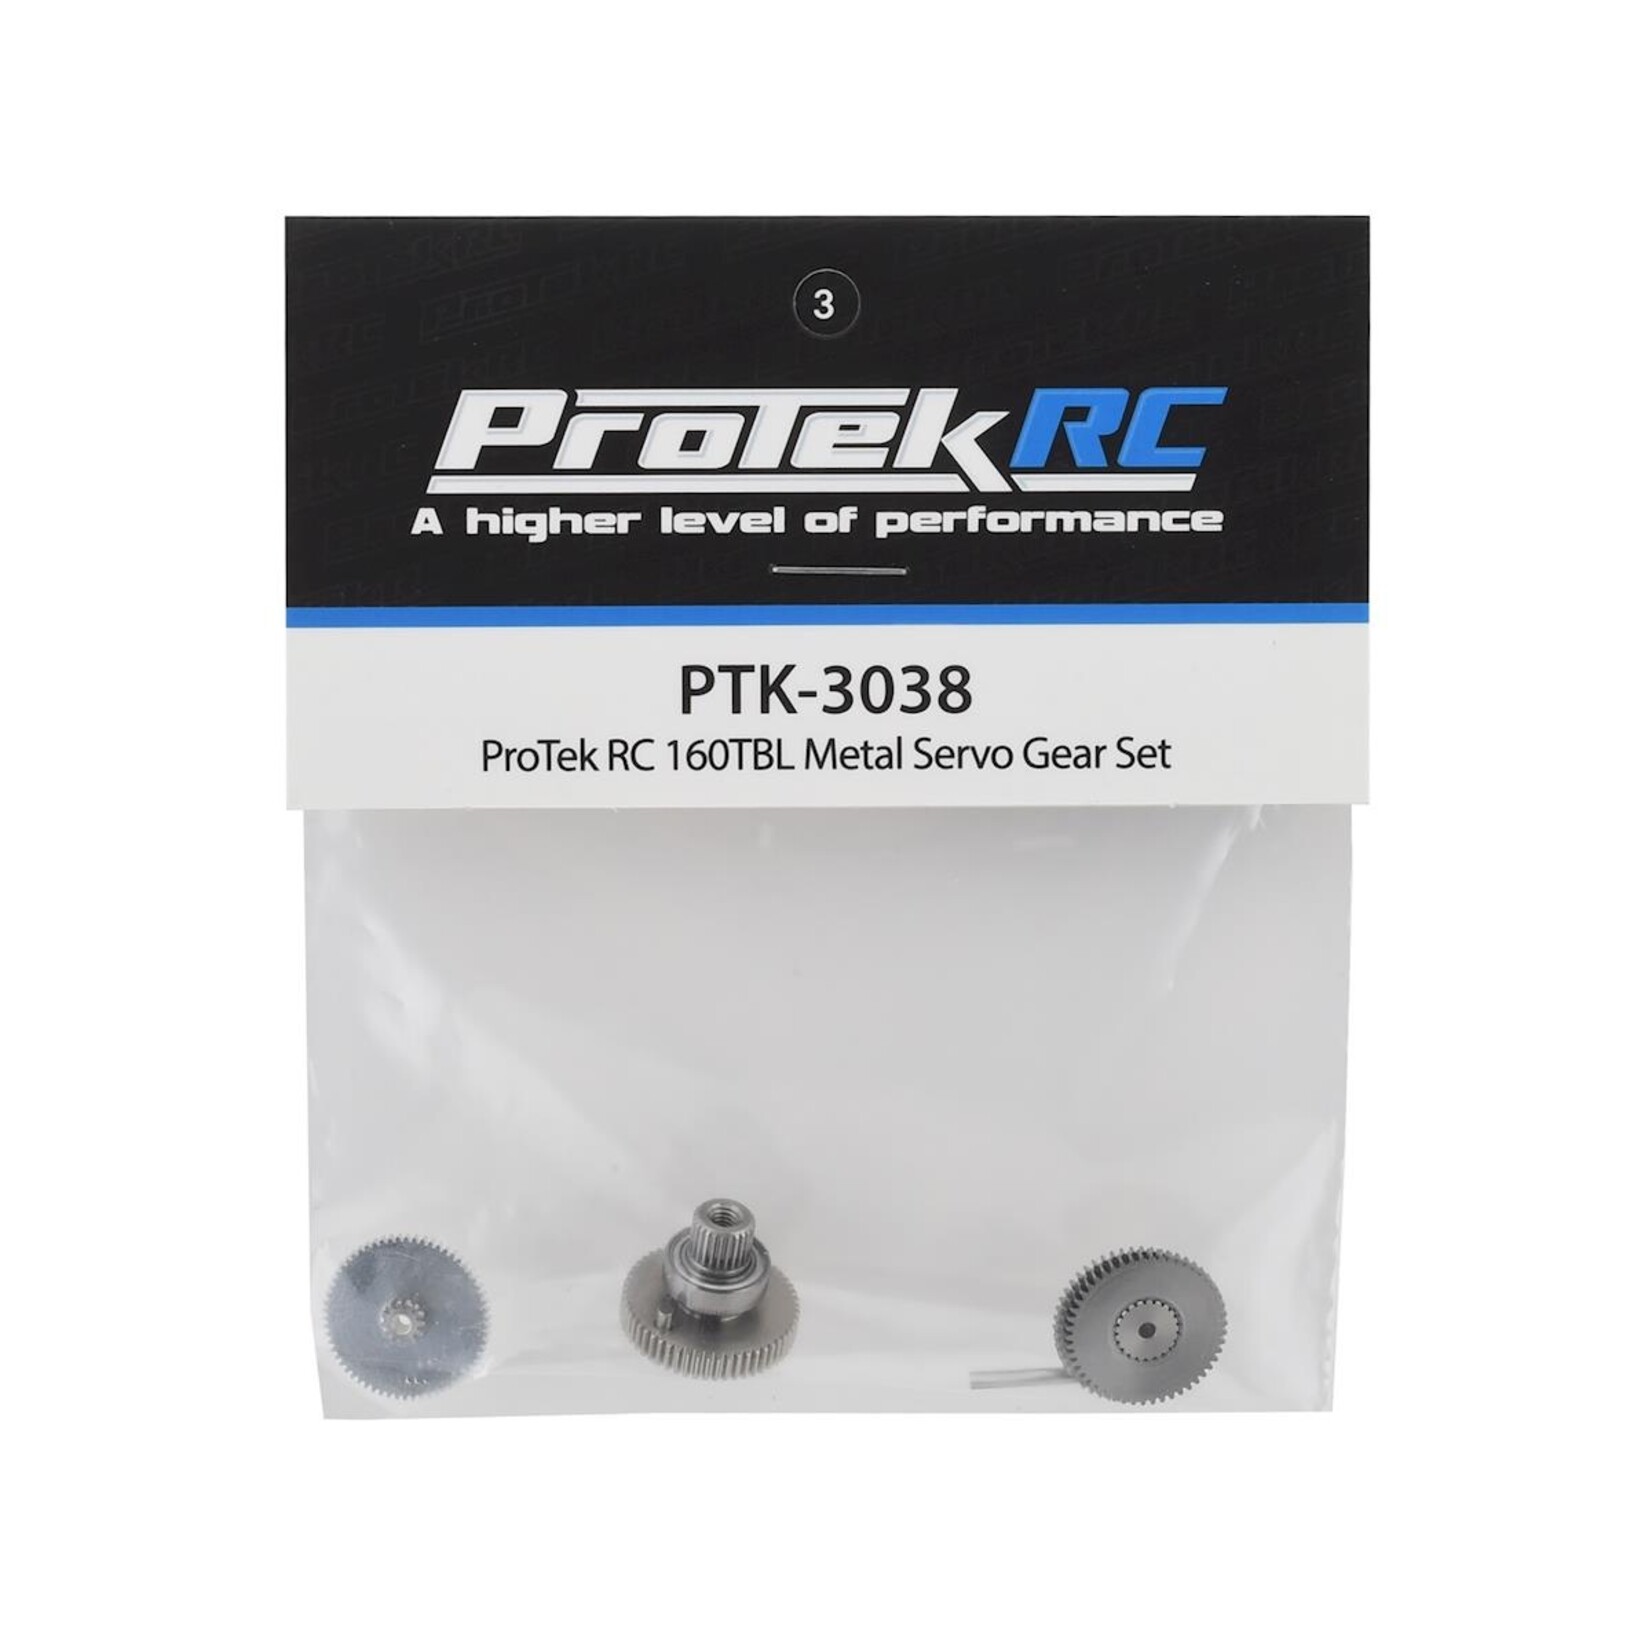 ProTek RC ProTek RC 160TBL Metal Servo Gear Set #PTK-3038